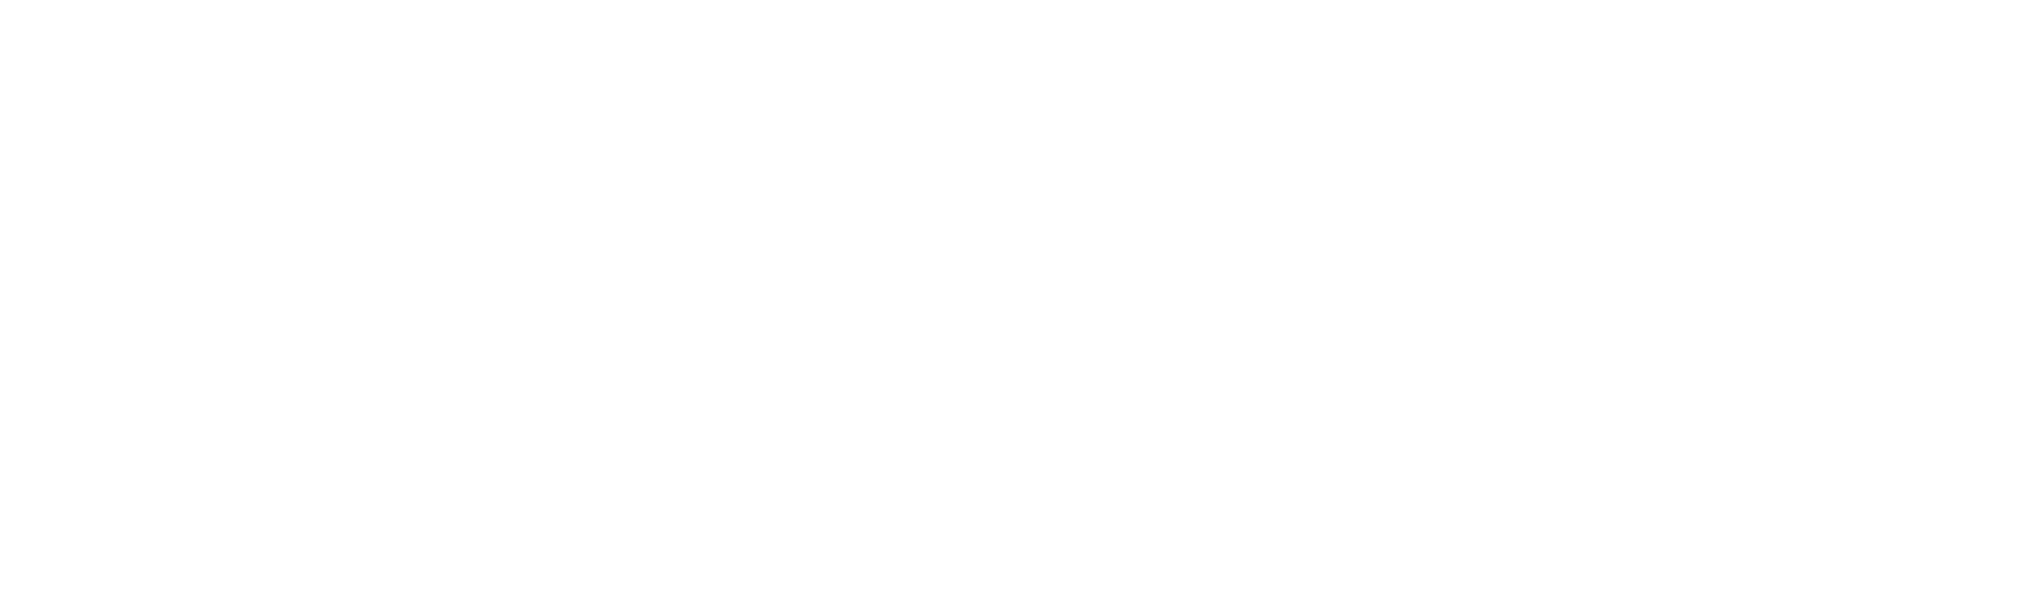 Certyfikat HACCP z ISOQAR